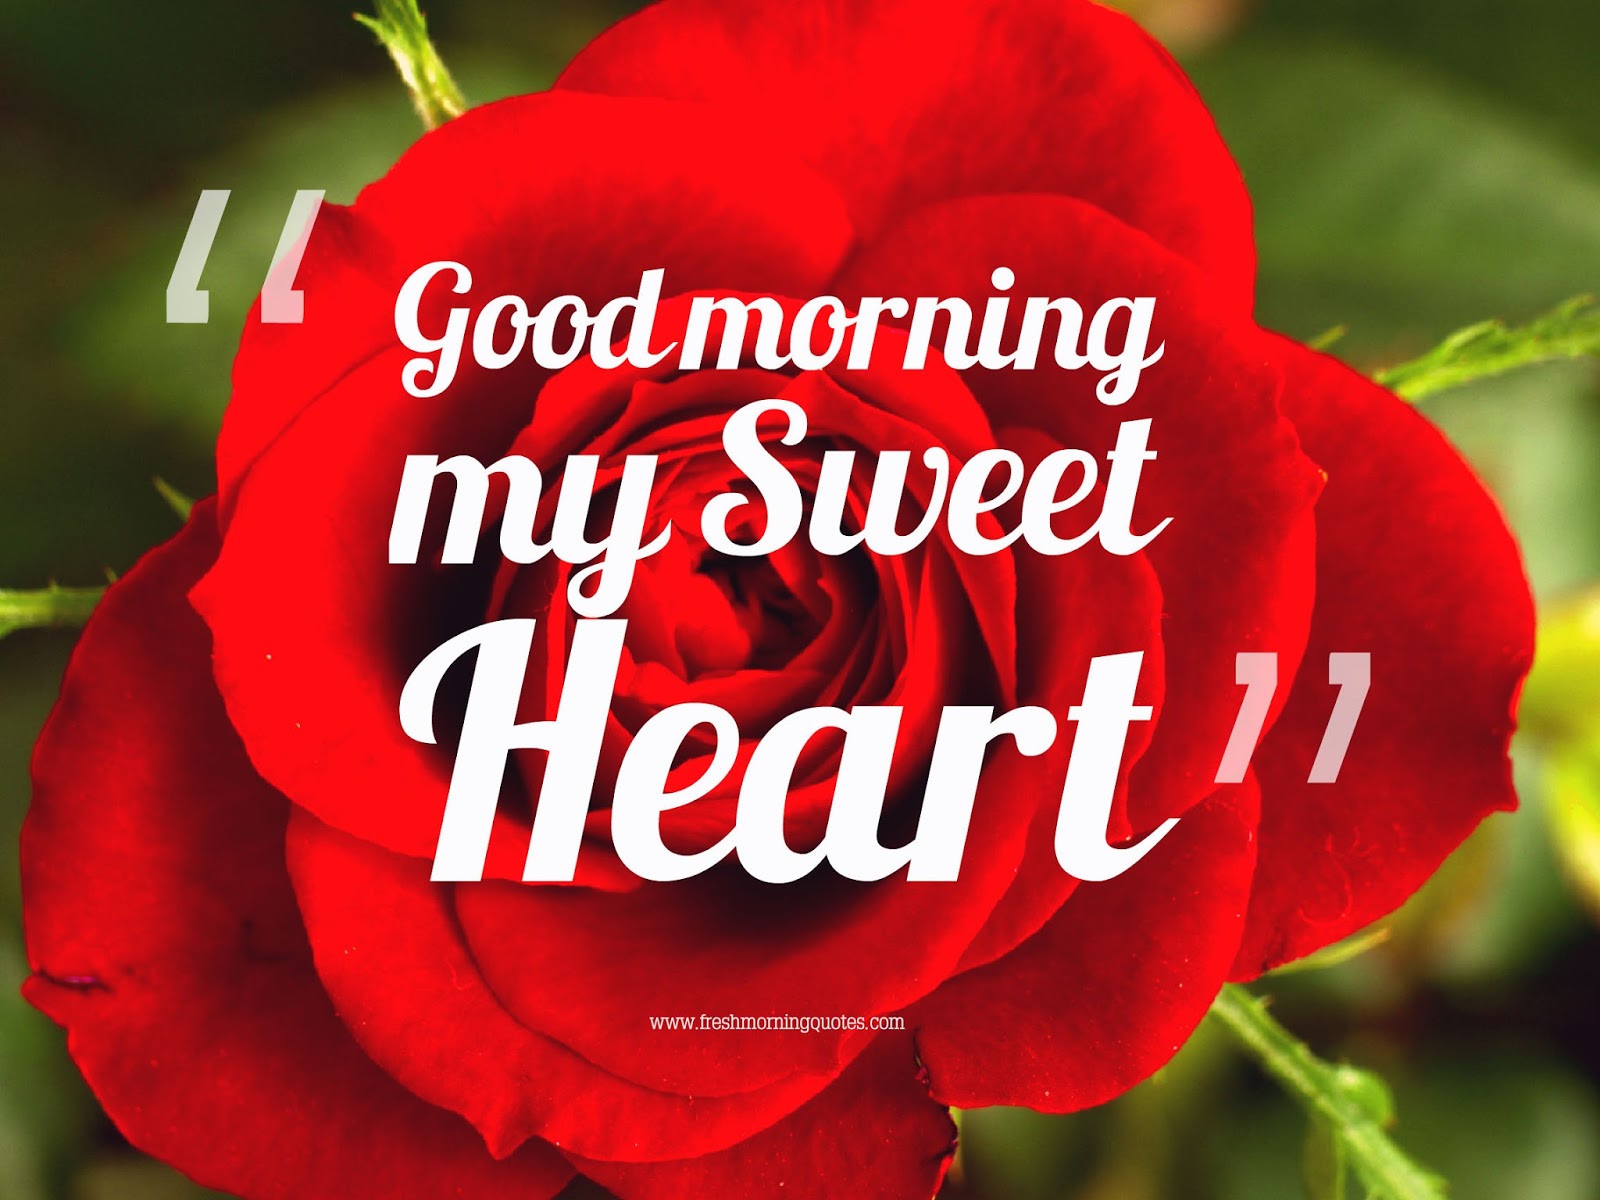 lovely red rose for sweet morning couple